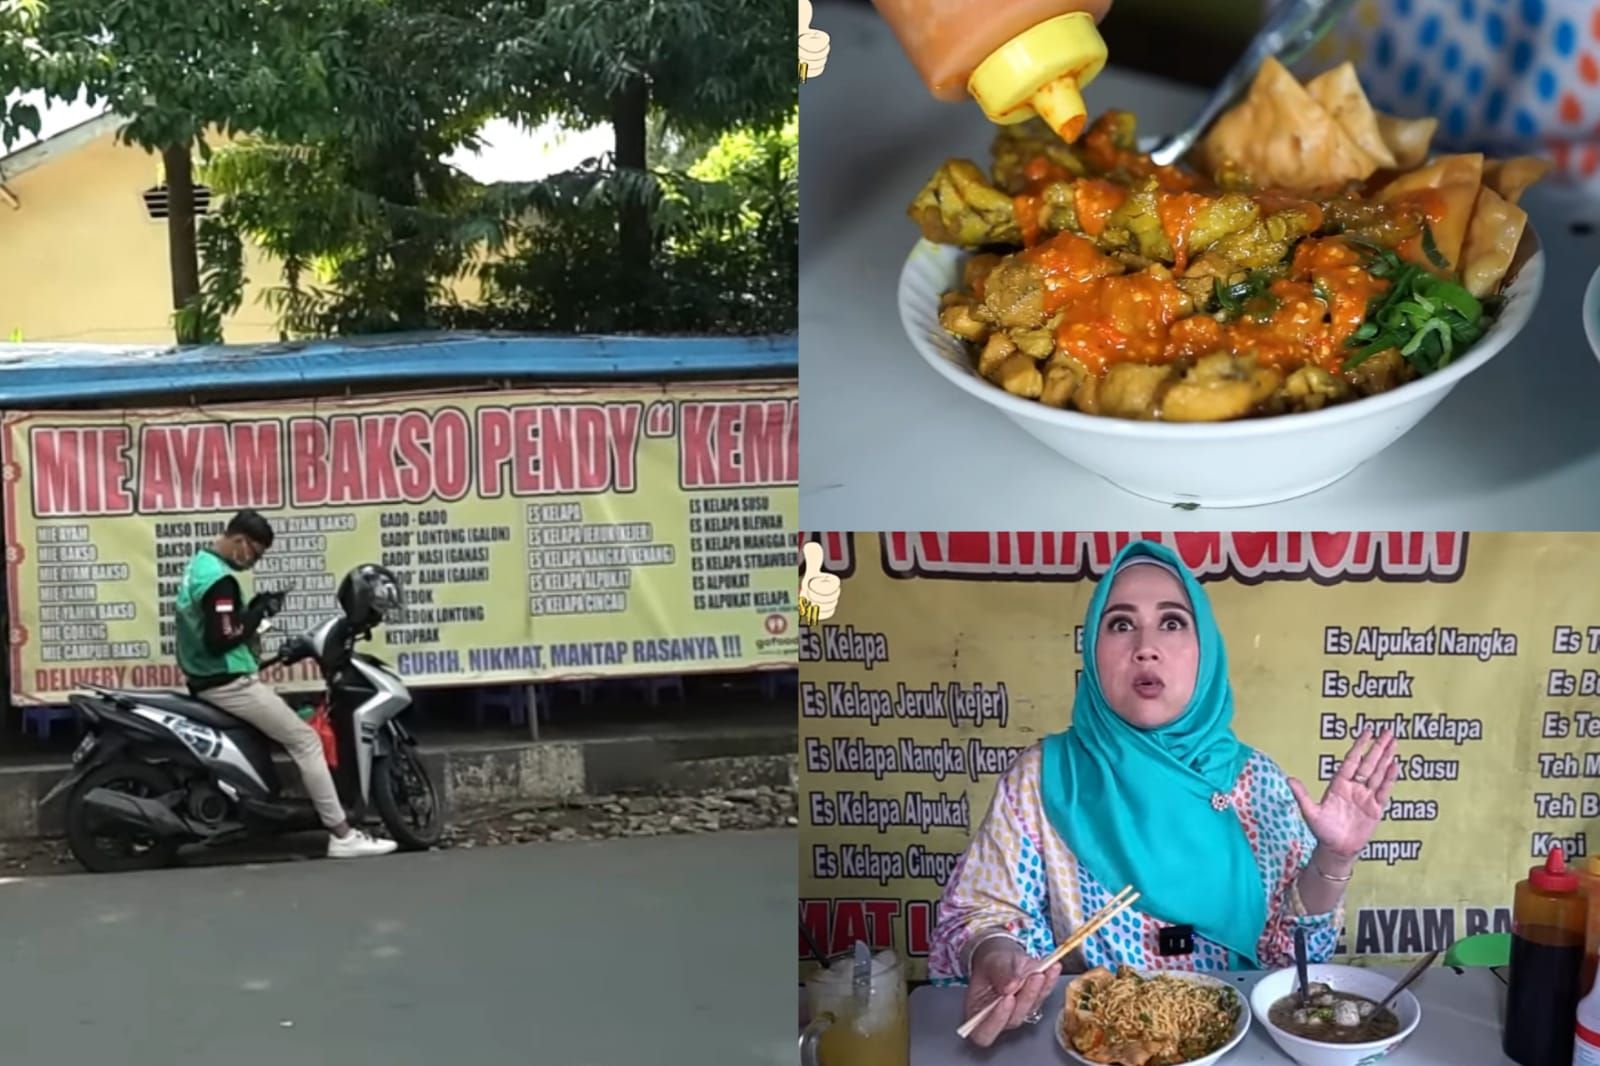 Jadi rekomendasi Shanty Denny, ini dia mie ayam Pendy yang legendaris di Jakarta Barat, rempahnya berasa dan porsinya banyak.